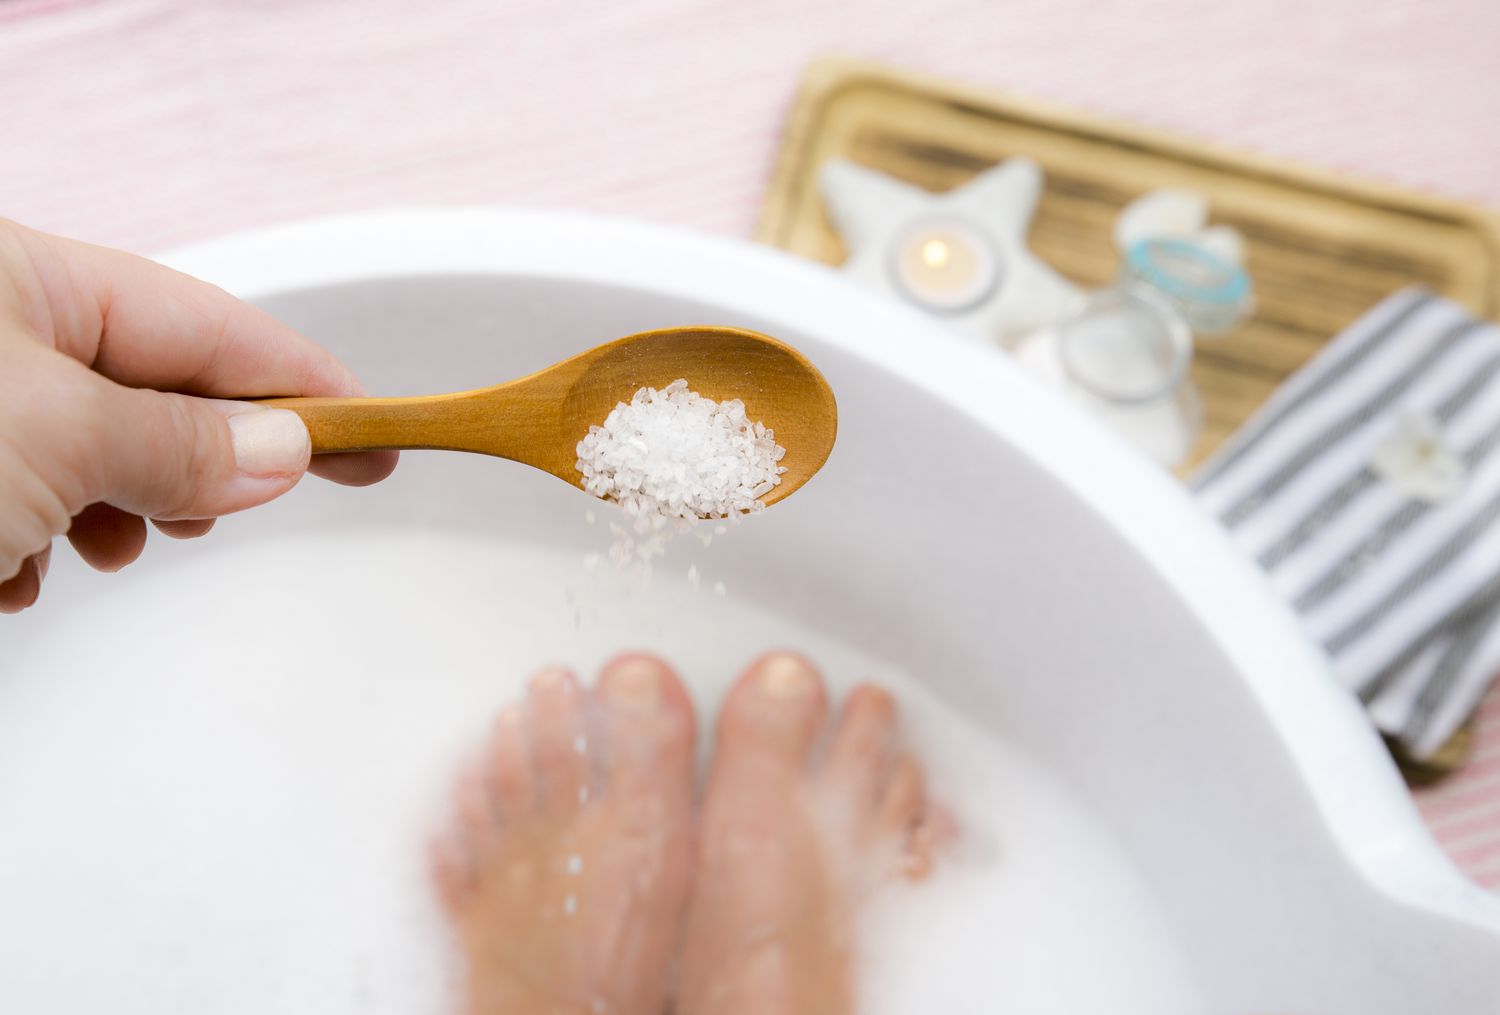 How To Use Epsom Salt Without A Bathtub